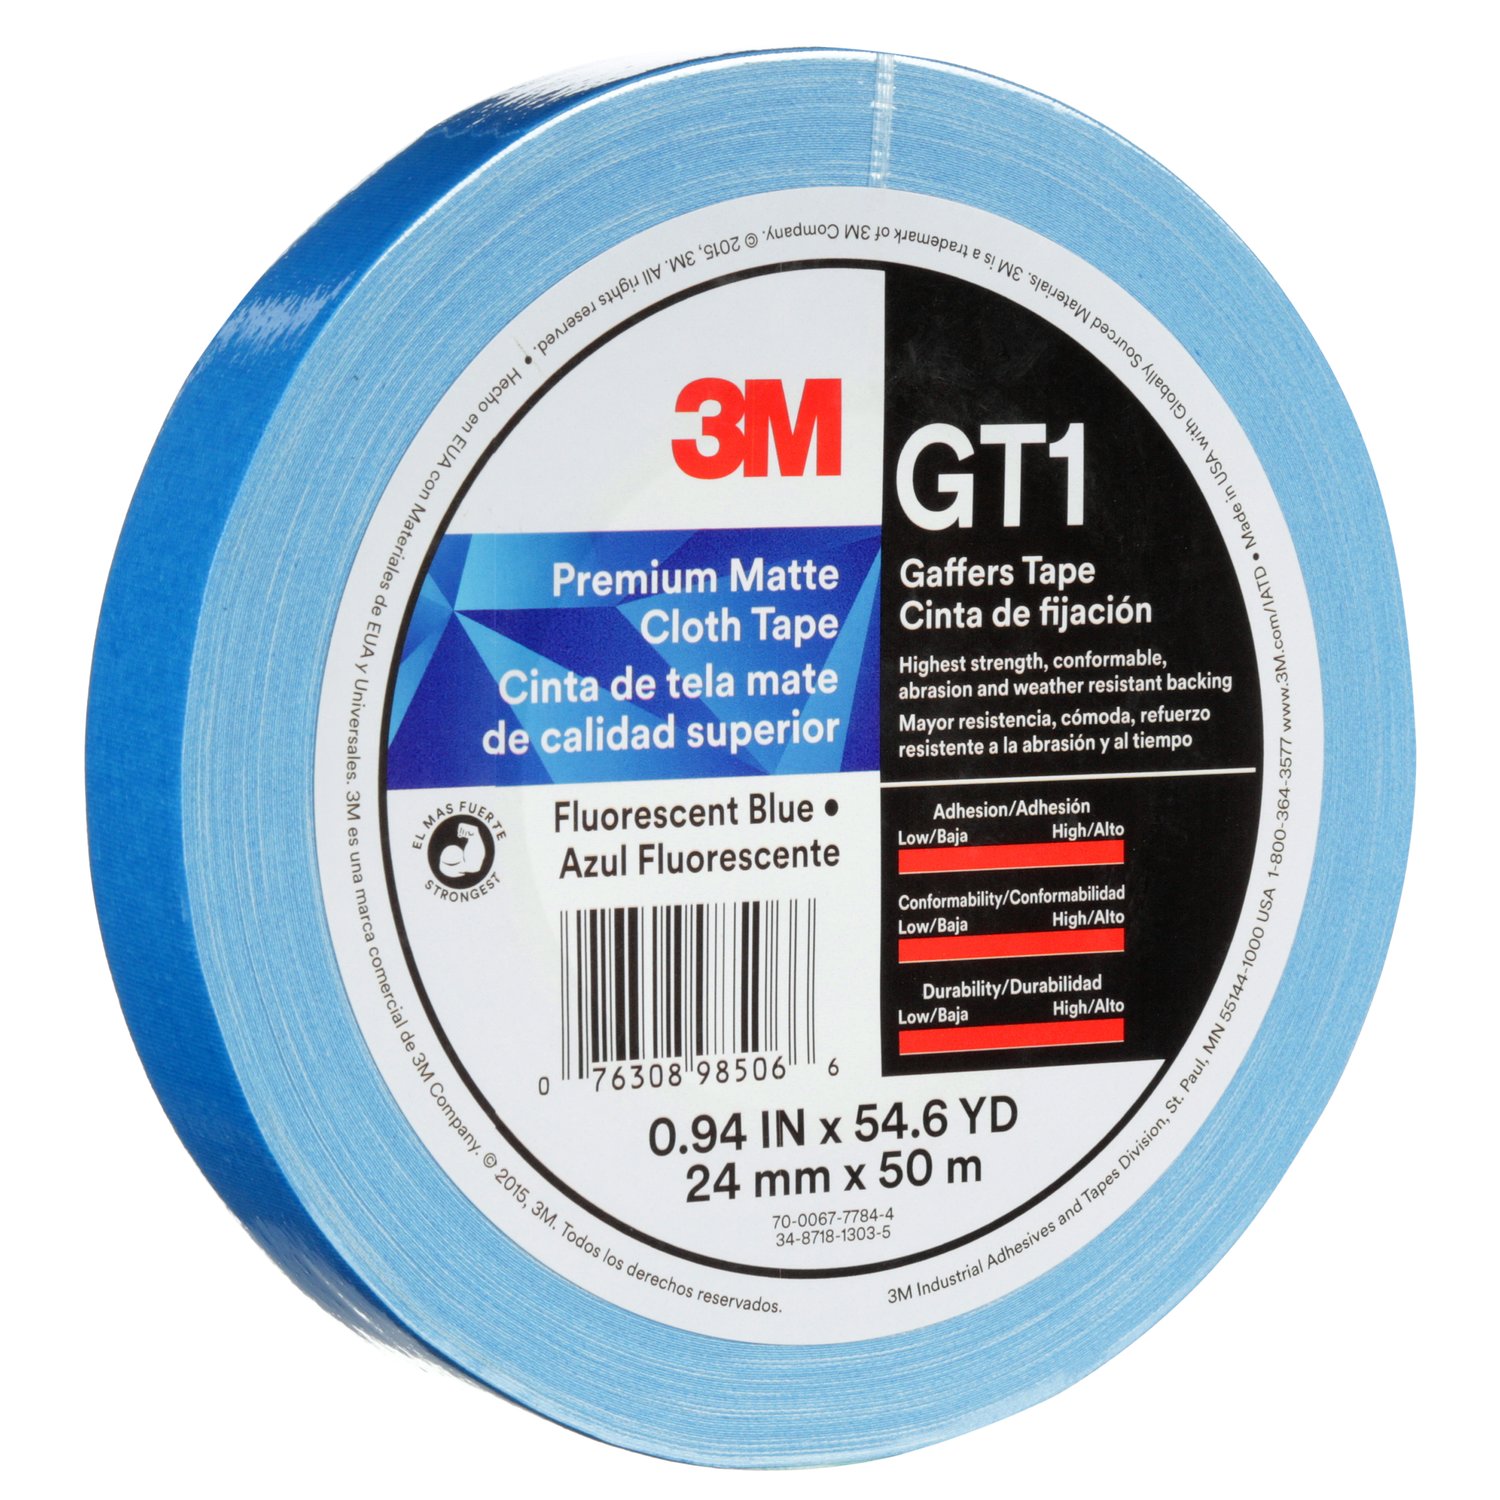 7010376458 - 3M Premium Matte Cloth (Gaffers) Tape GT1, Fluorescent Blue, 24 mm x 50
m, 11 mil, 48/Case